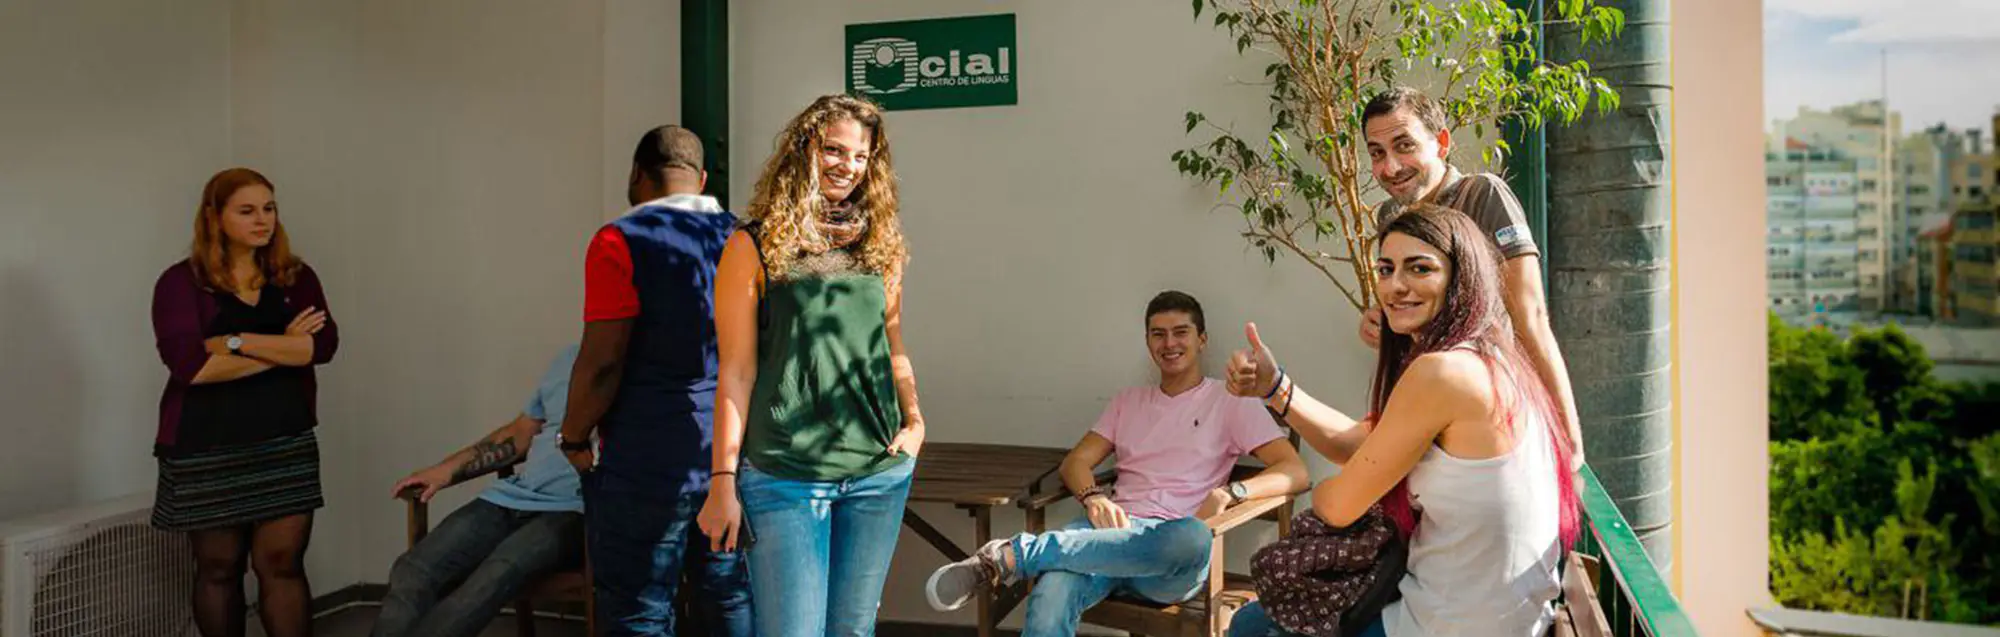 Als Bildungsurlaub anerkannte Sprachkurse bei CIAL Lisboa